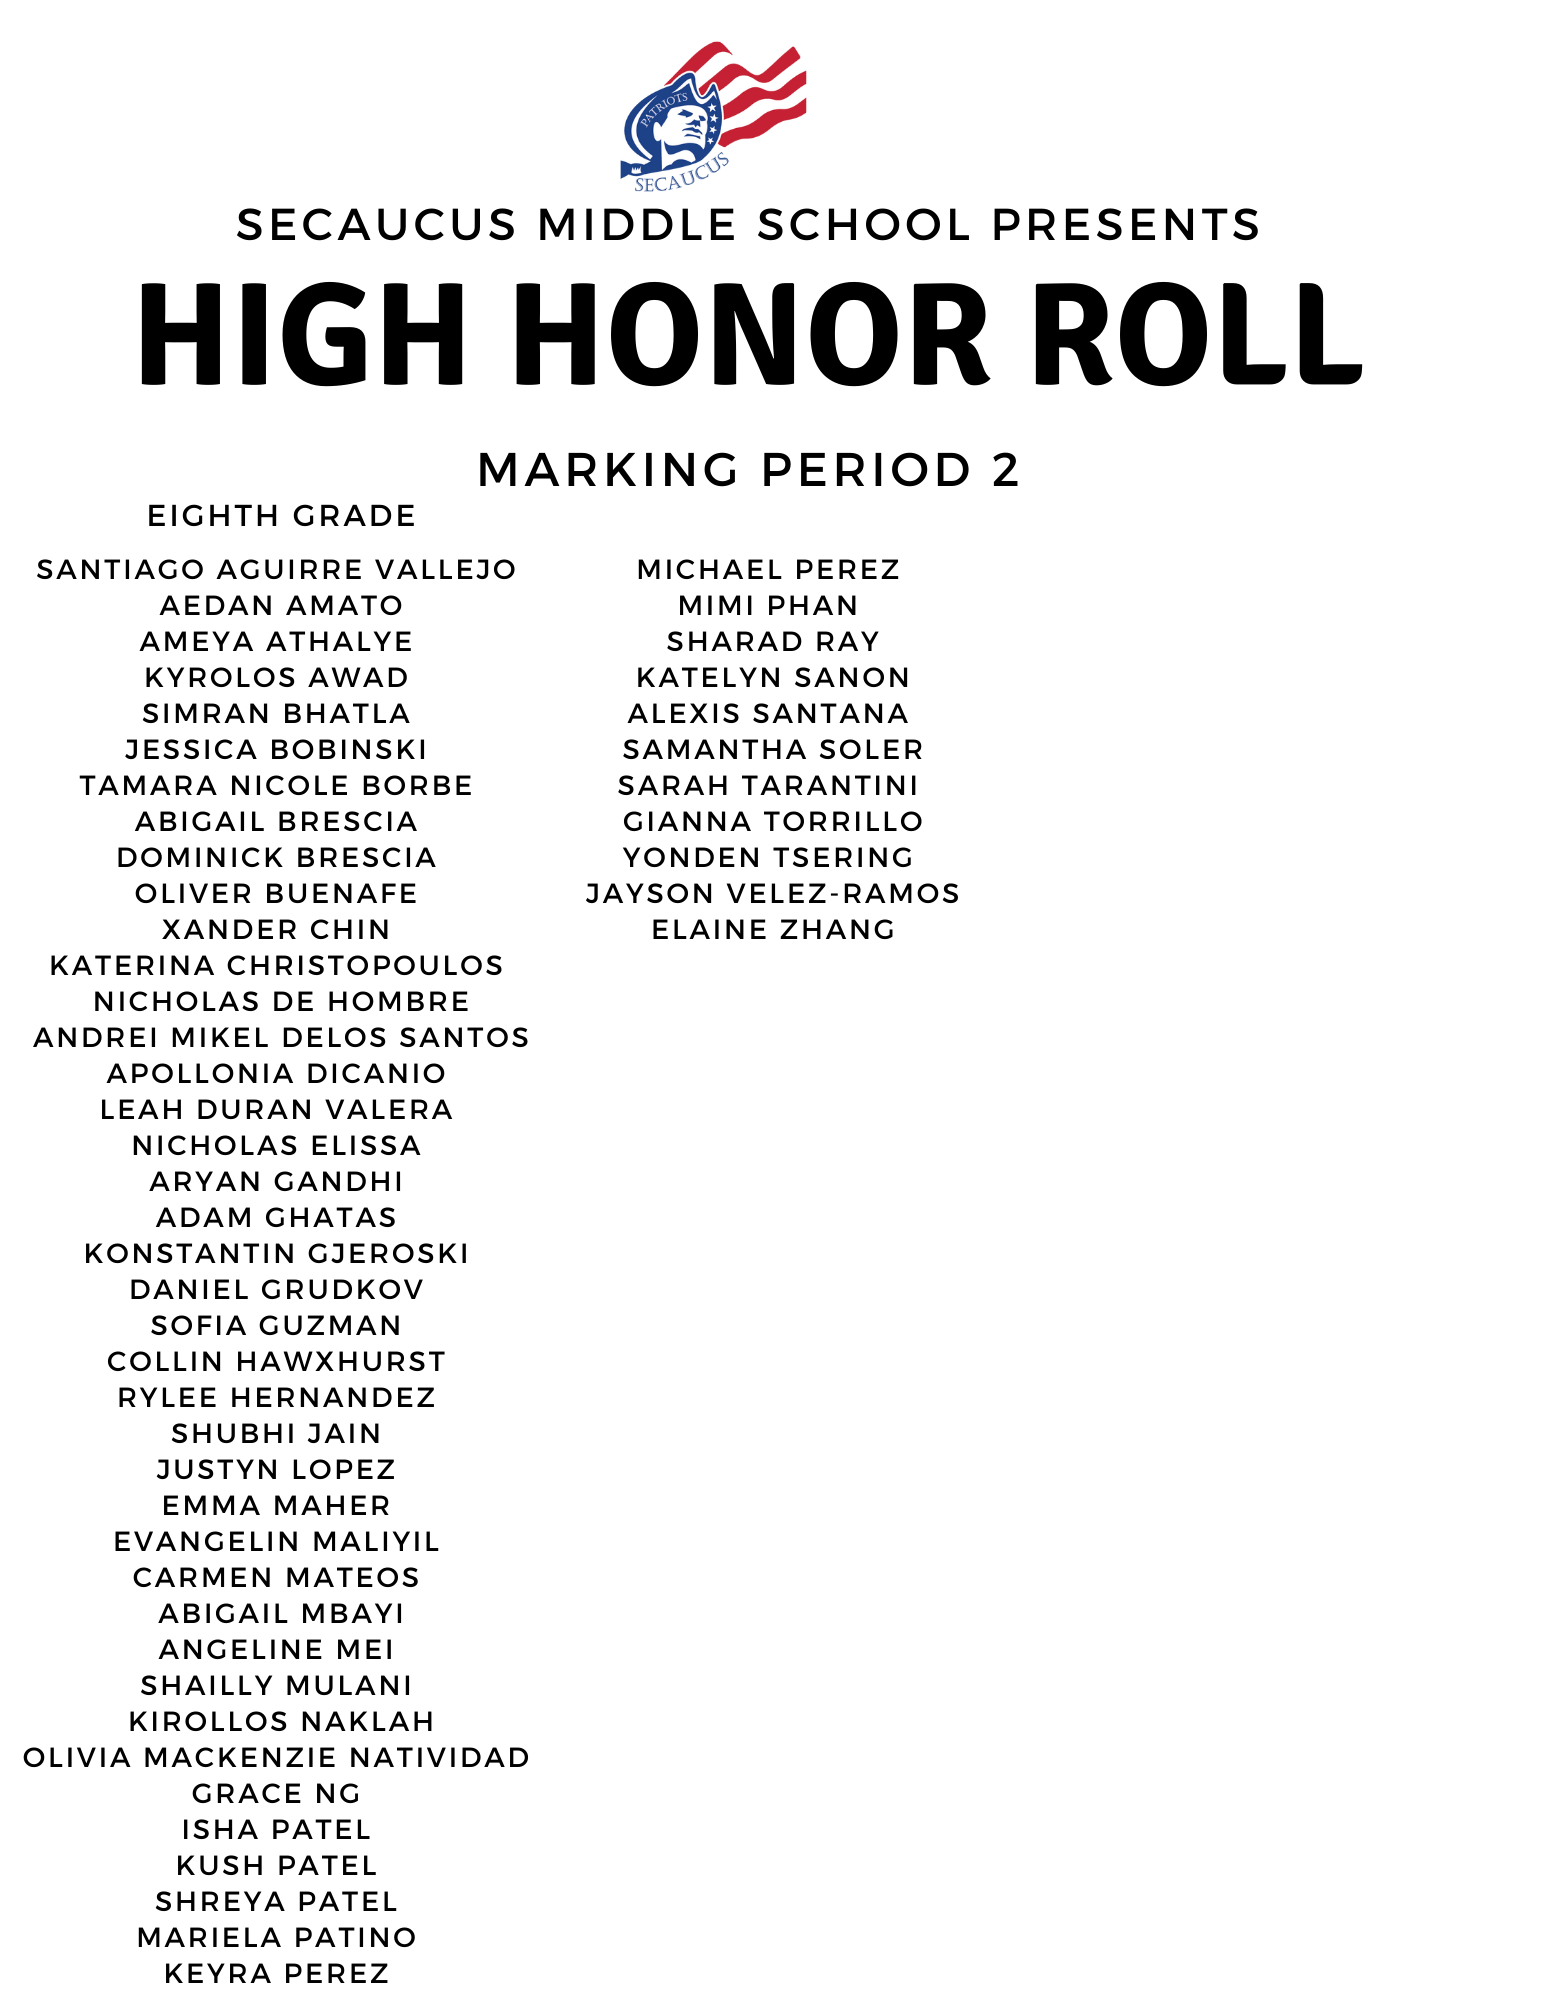 High honors